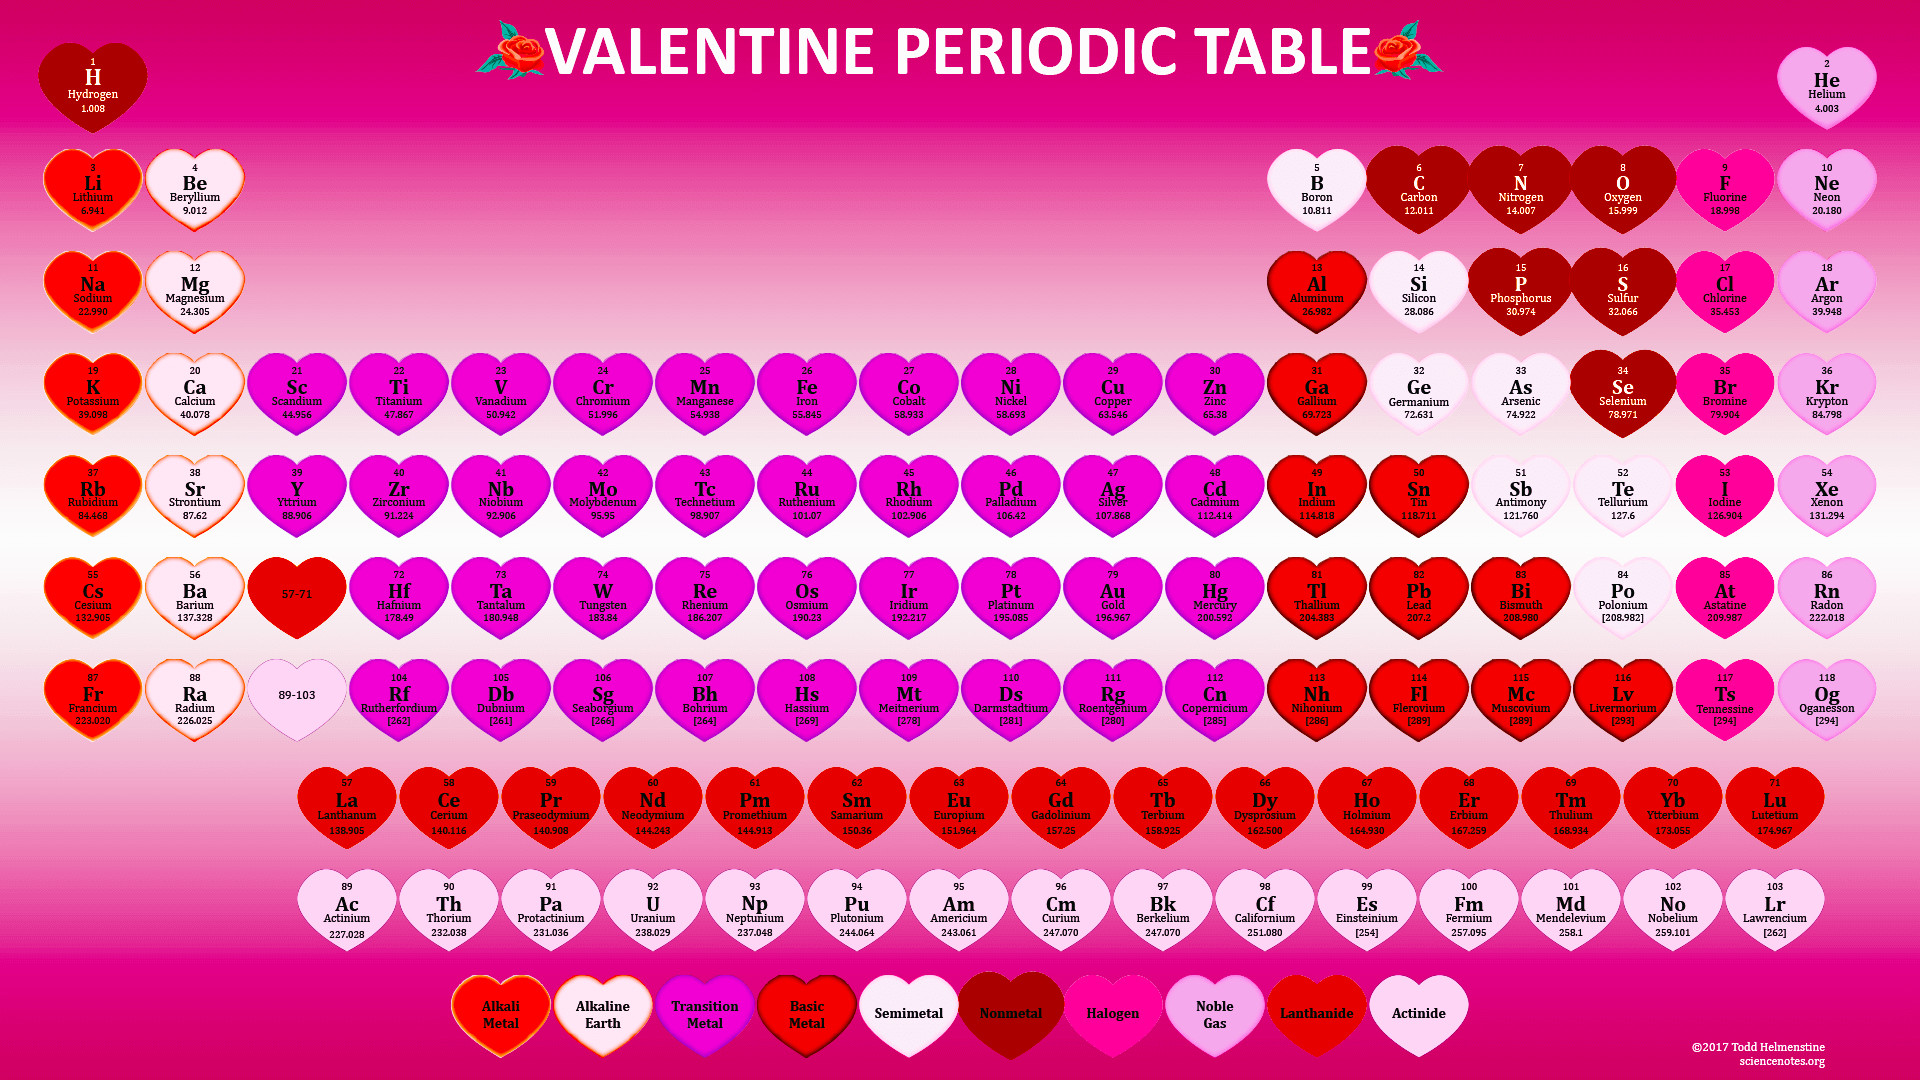 1920x1080 Valentine Peroidic Table - 2017 Edition